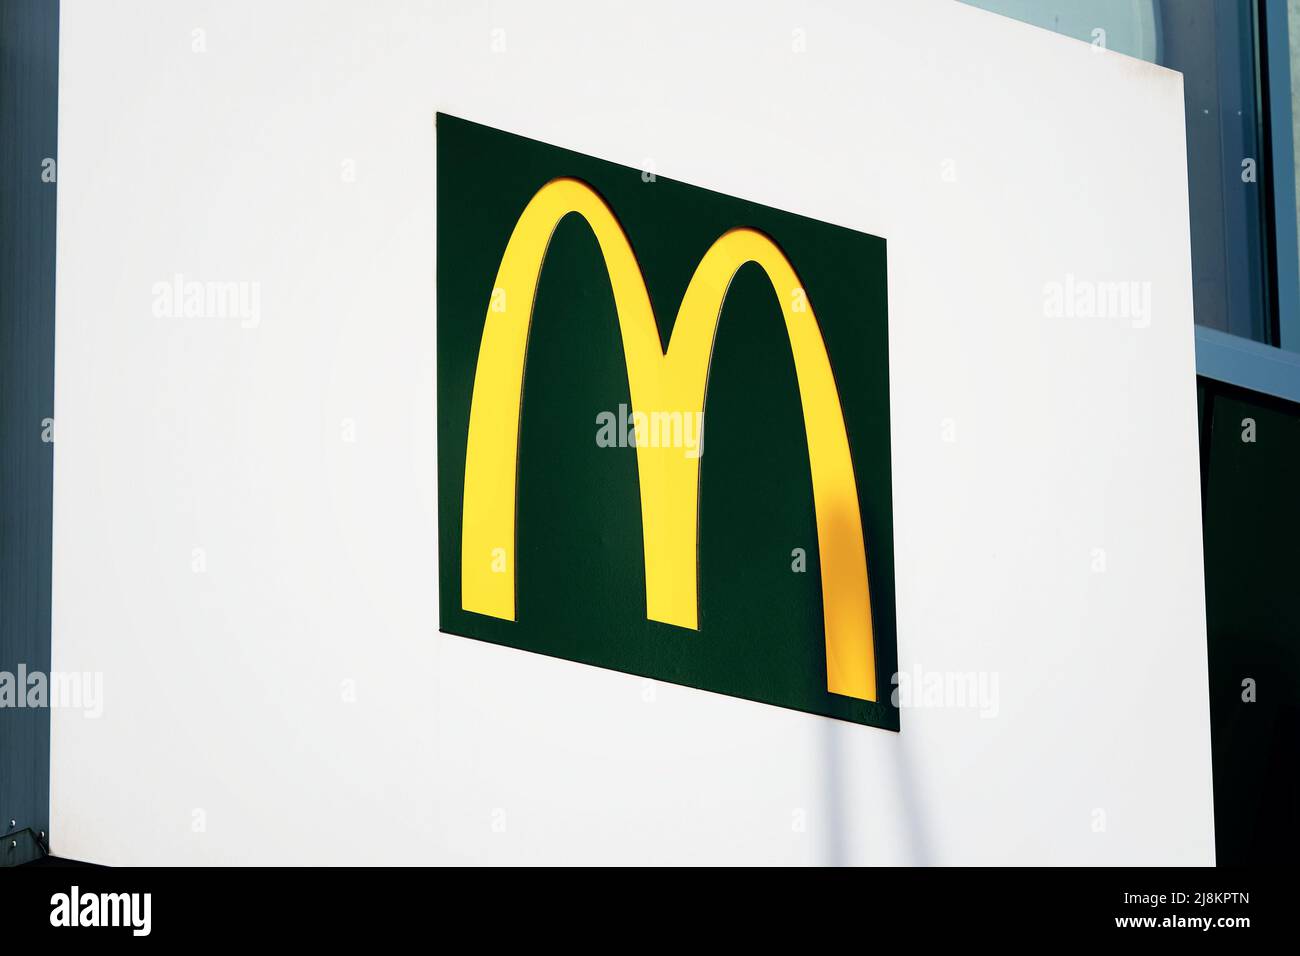 McDonald's logo sign outside. Stock Photo